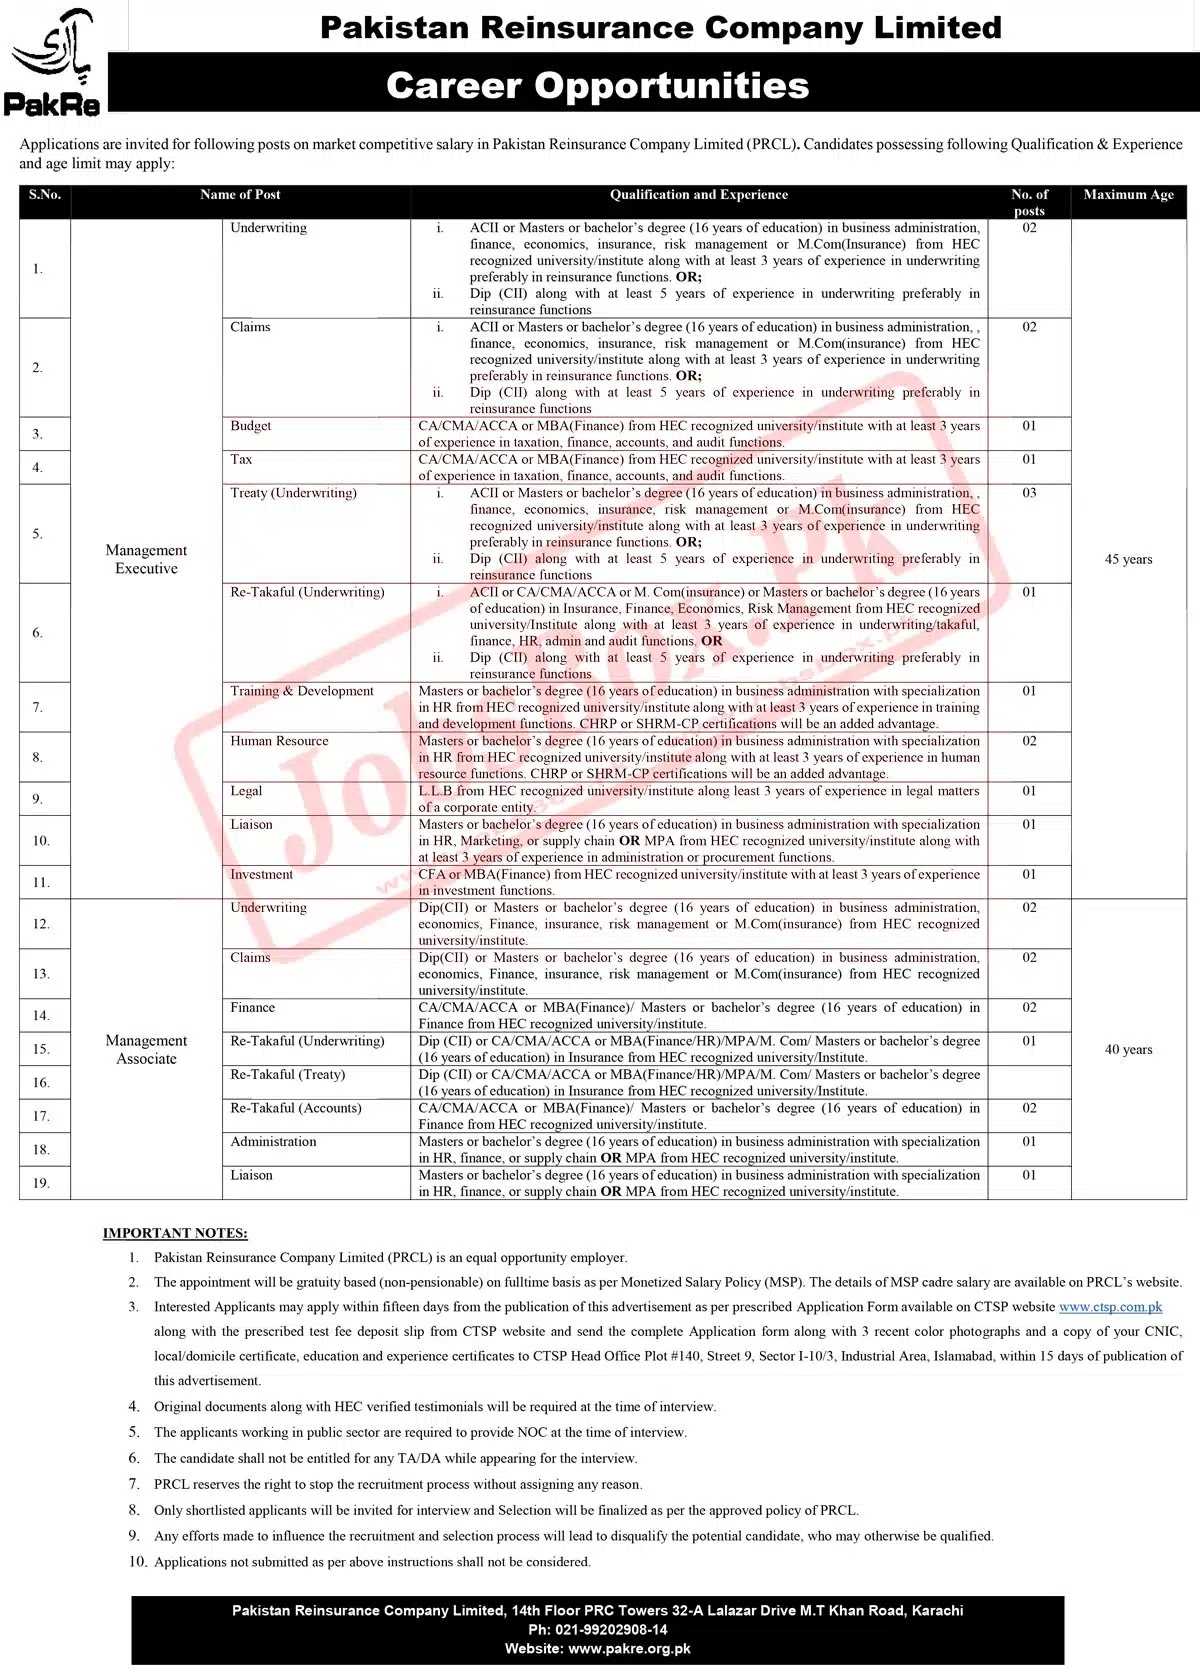 Pakistan Reinsurance Company Limited PRCL Jobs 2023 - Latest Advertisement